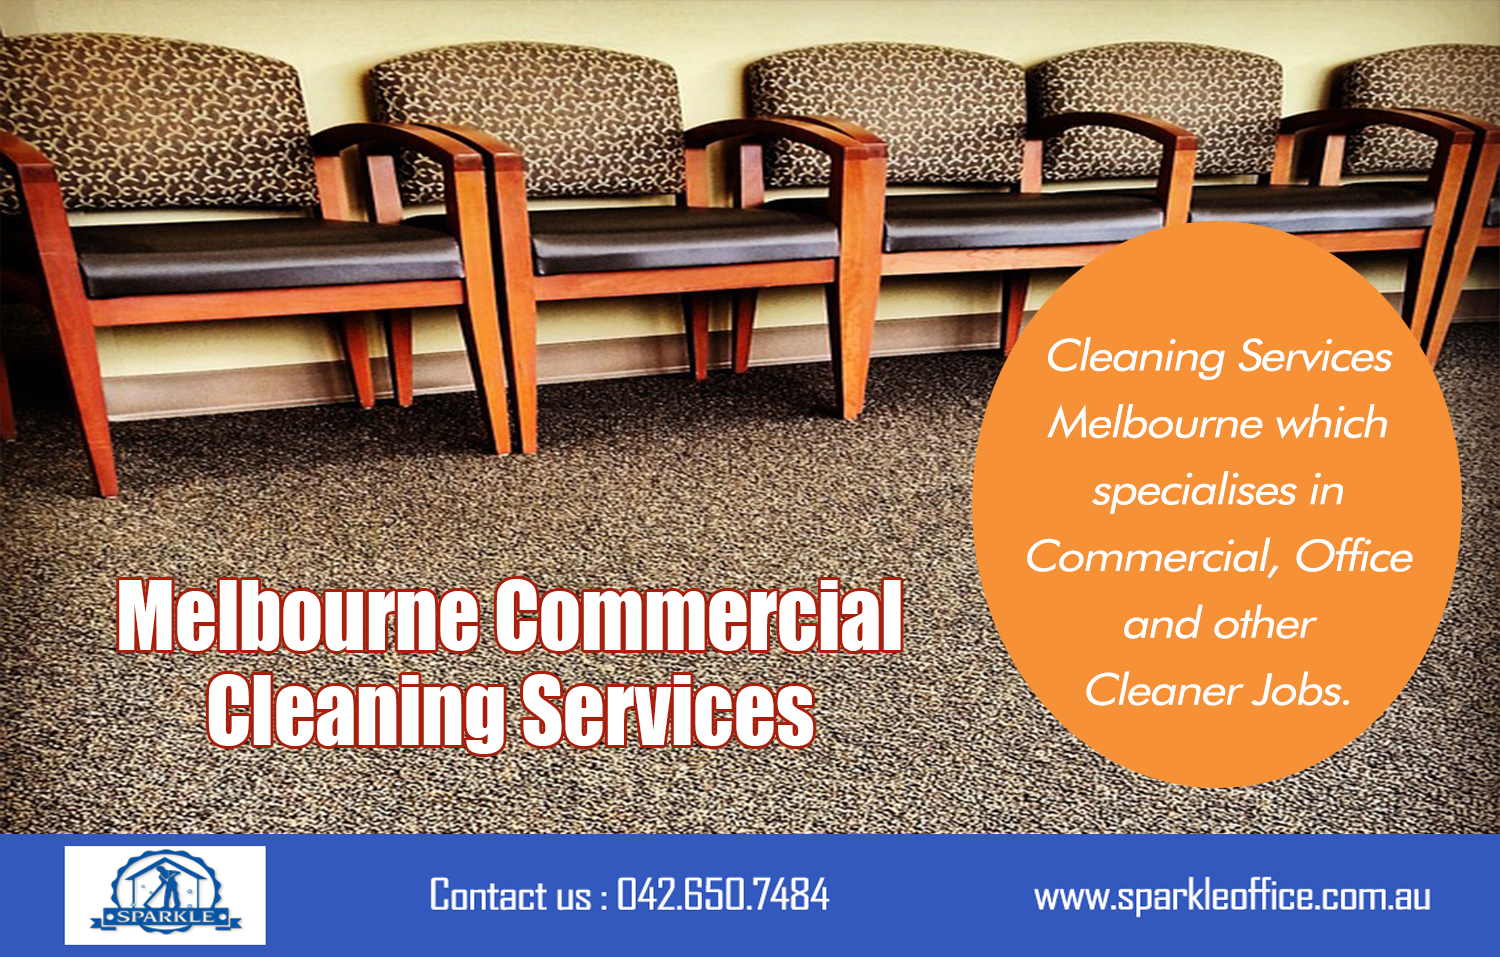 Melbourne Commercial Cleaning Services| Call Us - 042 650 7484  | sparkleoffice.com.au